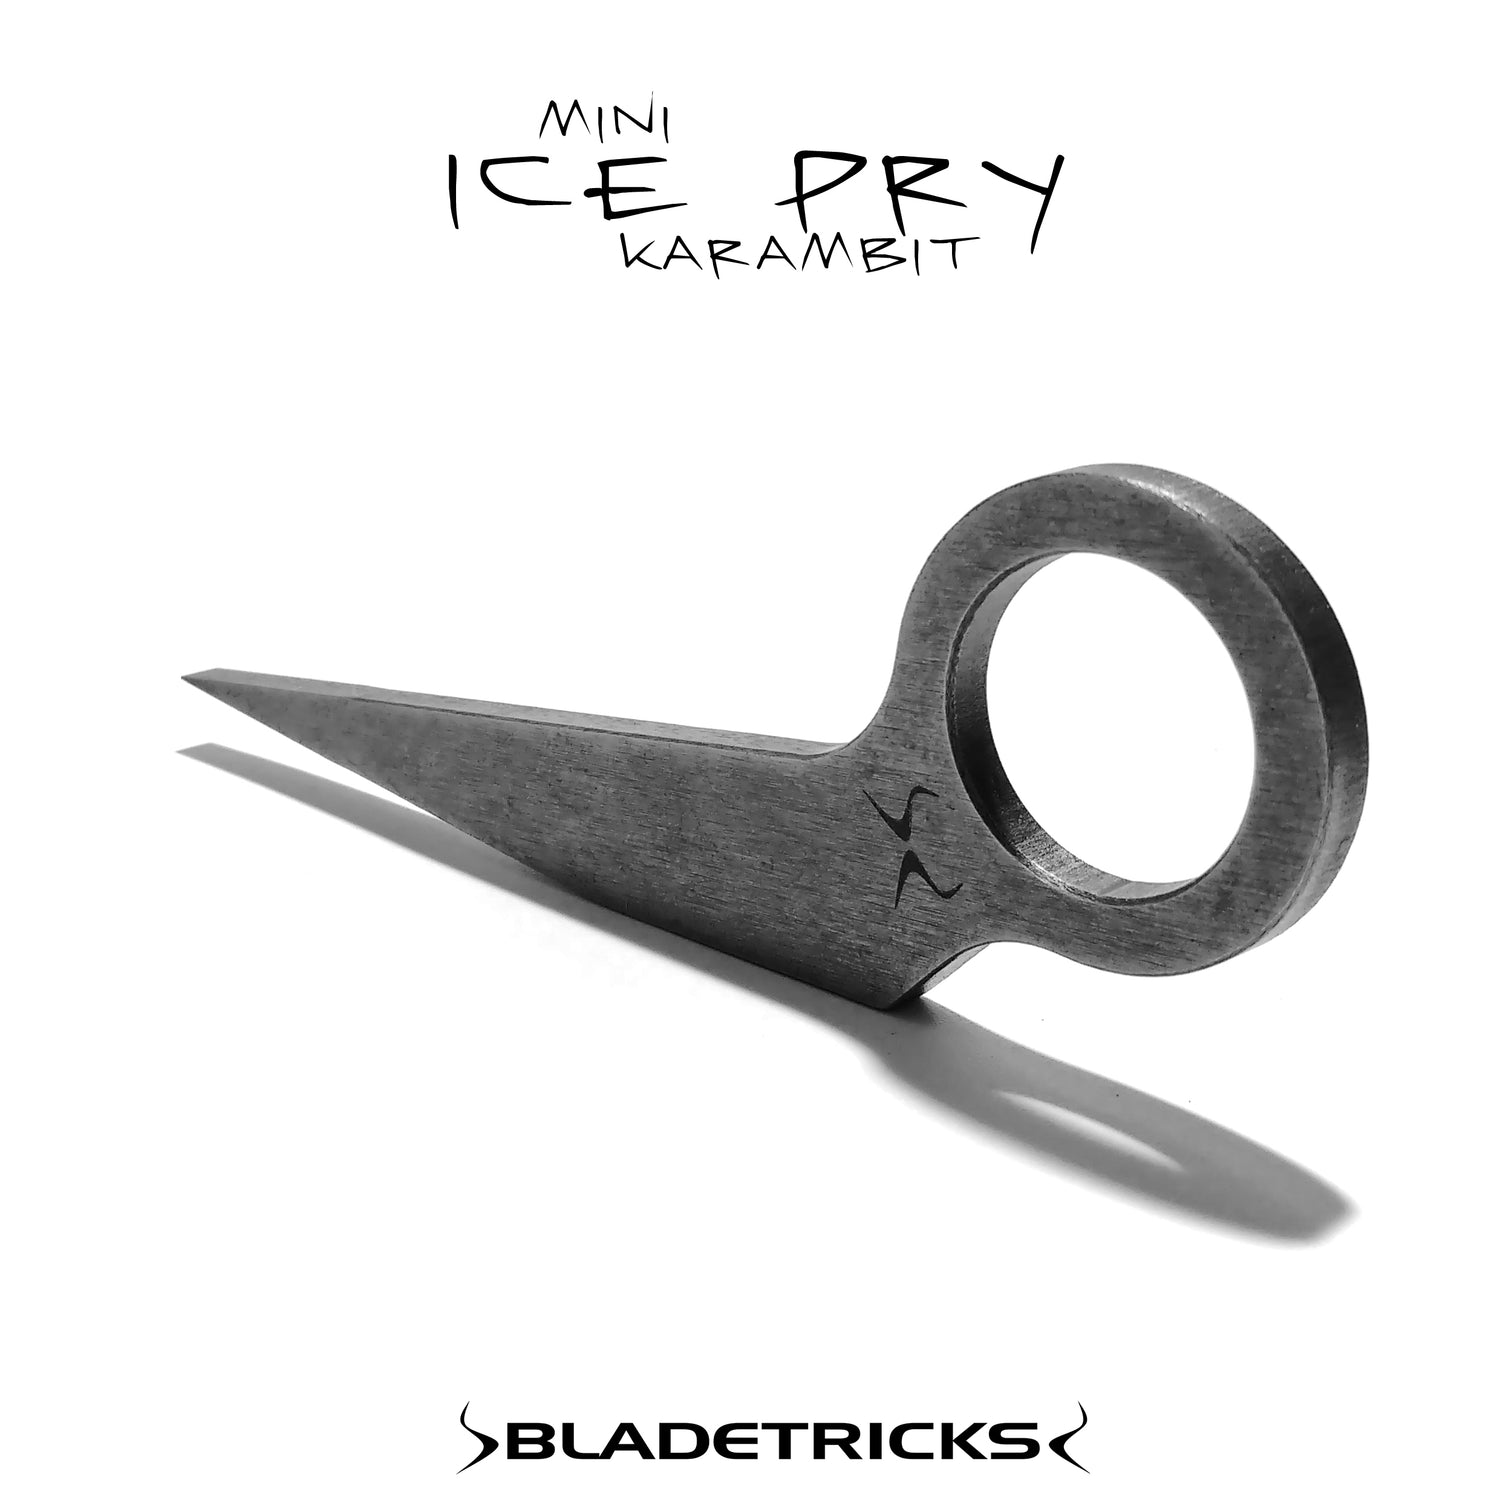 Bladetricks pocketdump tactical Mini Ice Pry Karambit